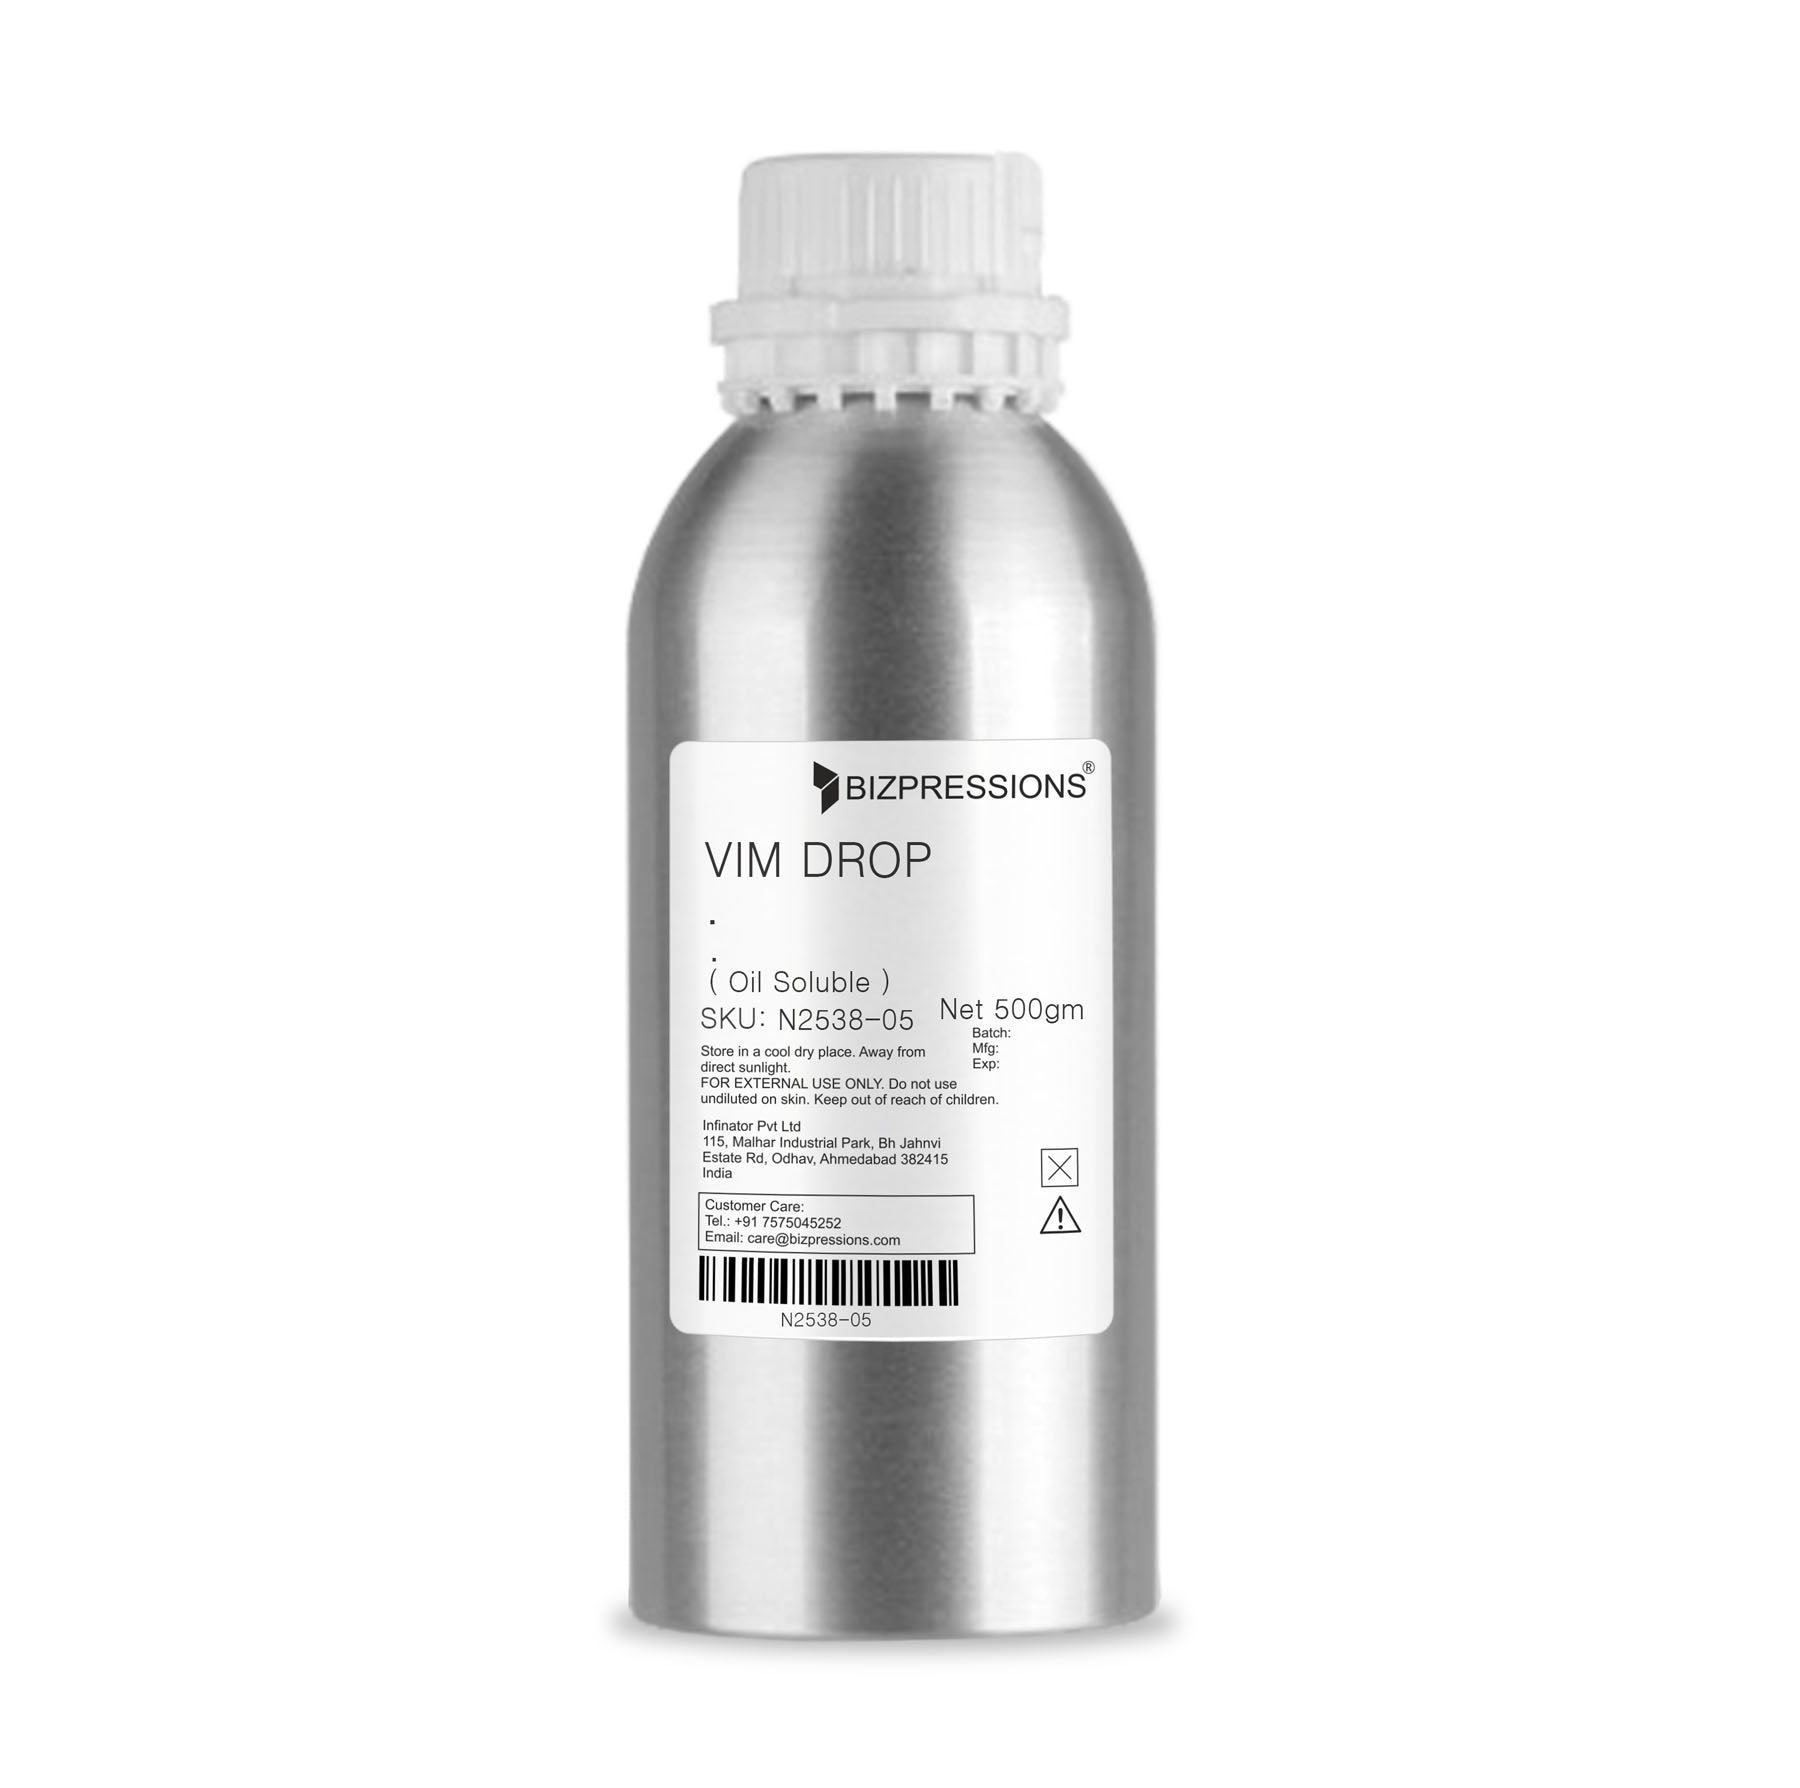 VIM DROP - Fragrance ( Oil Soluble ) - 500 gm